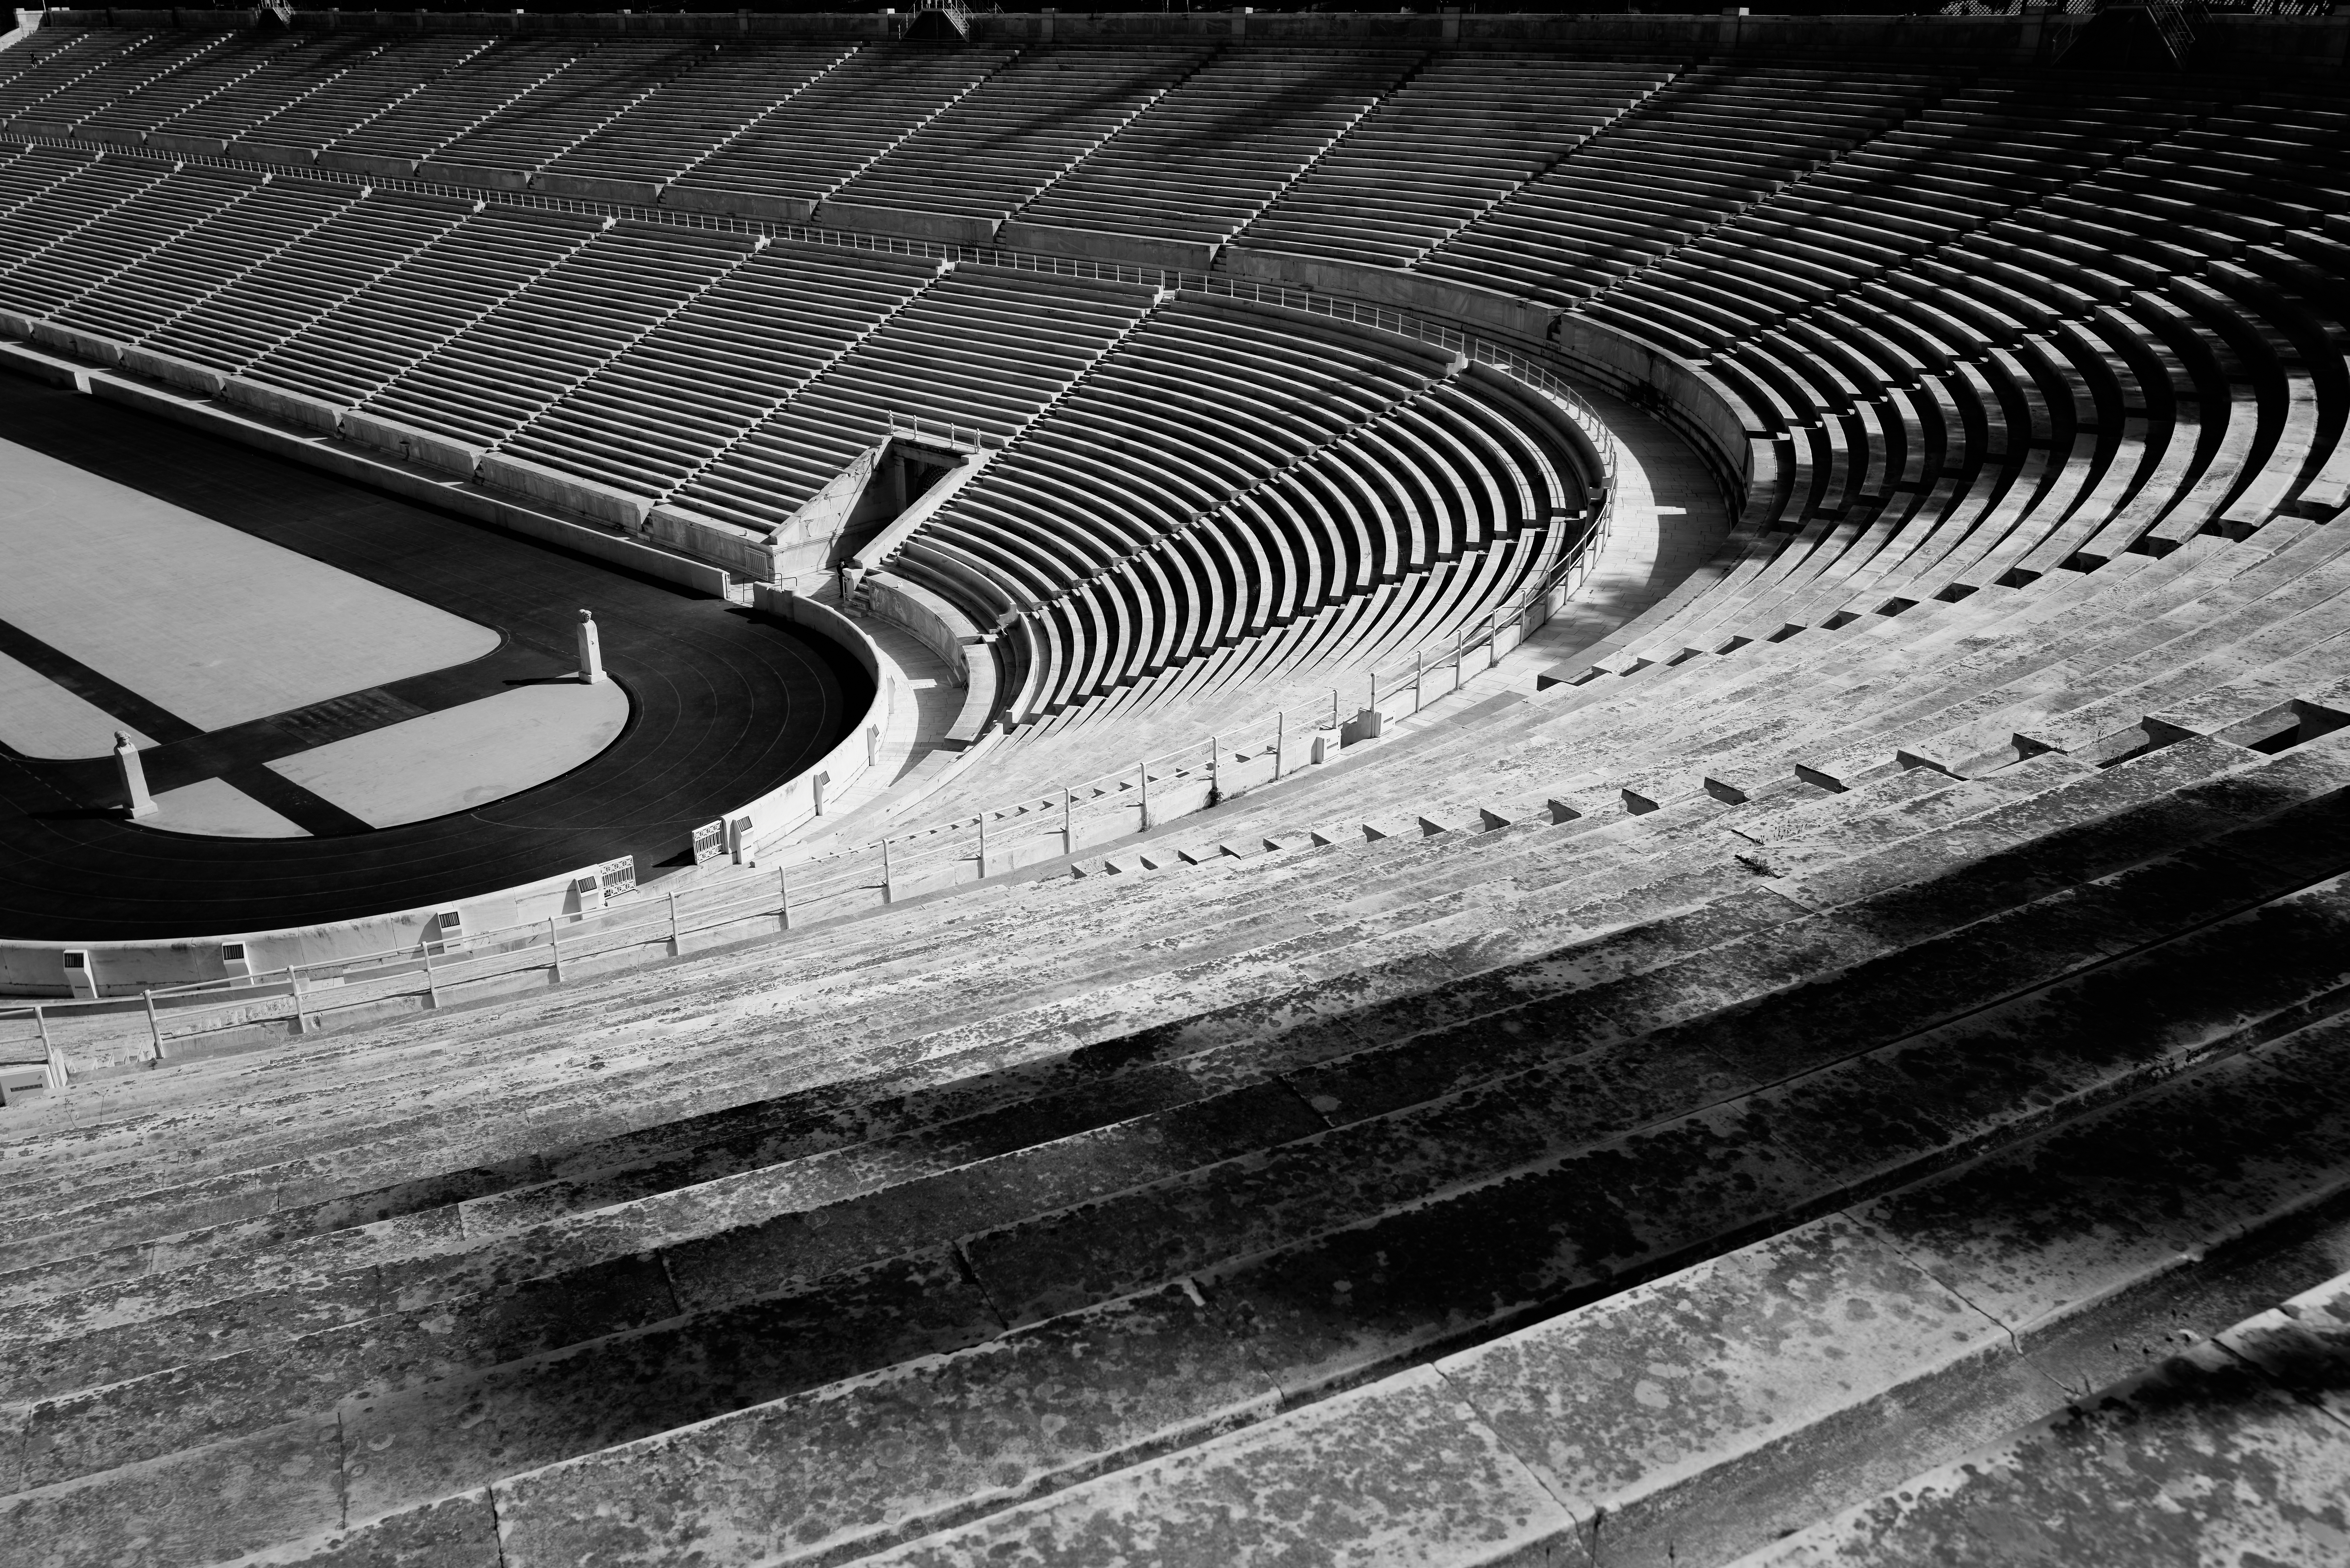 The Panathenaic Stadium, Athens, Greece; Photo by Michael Mortimer 